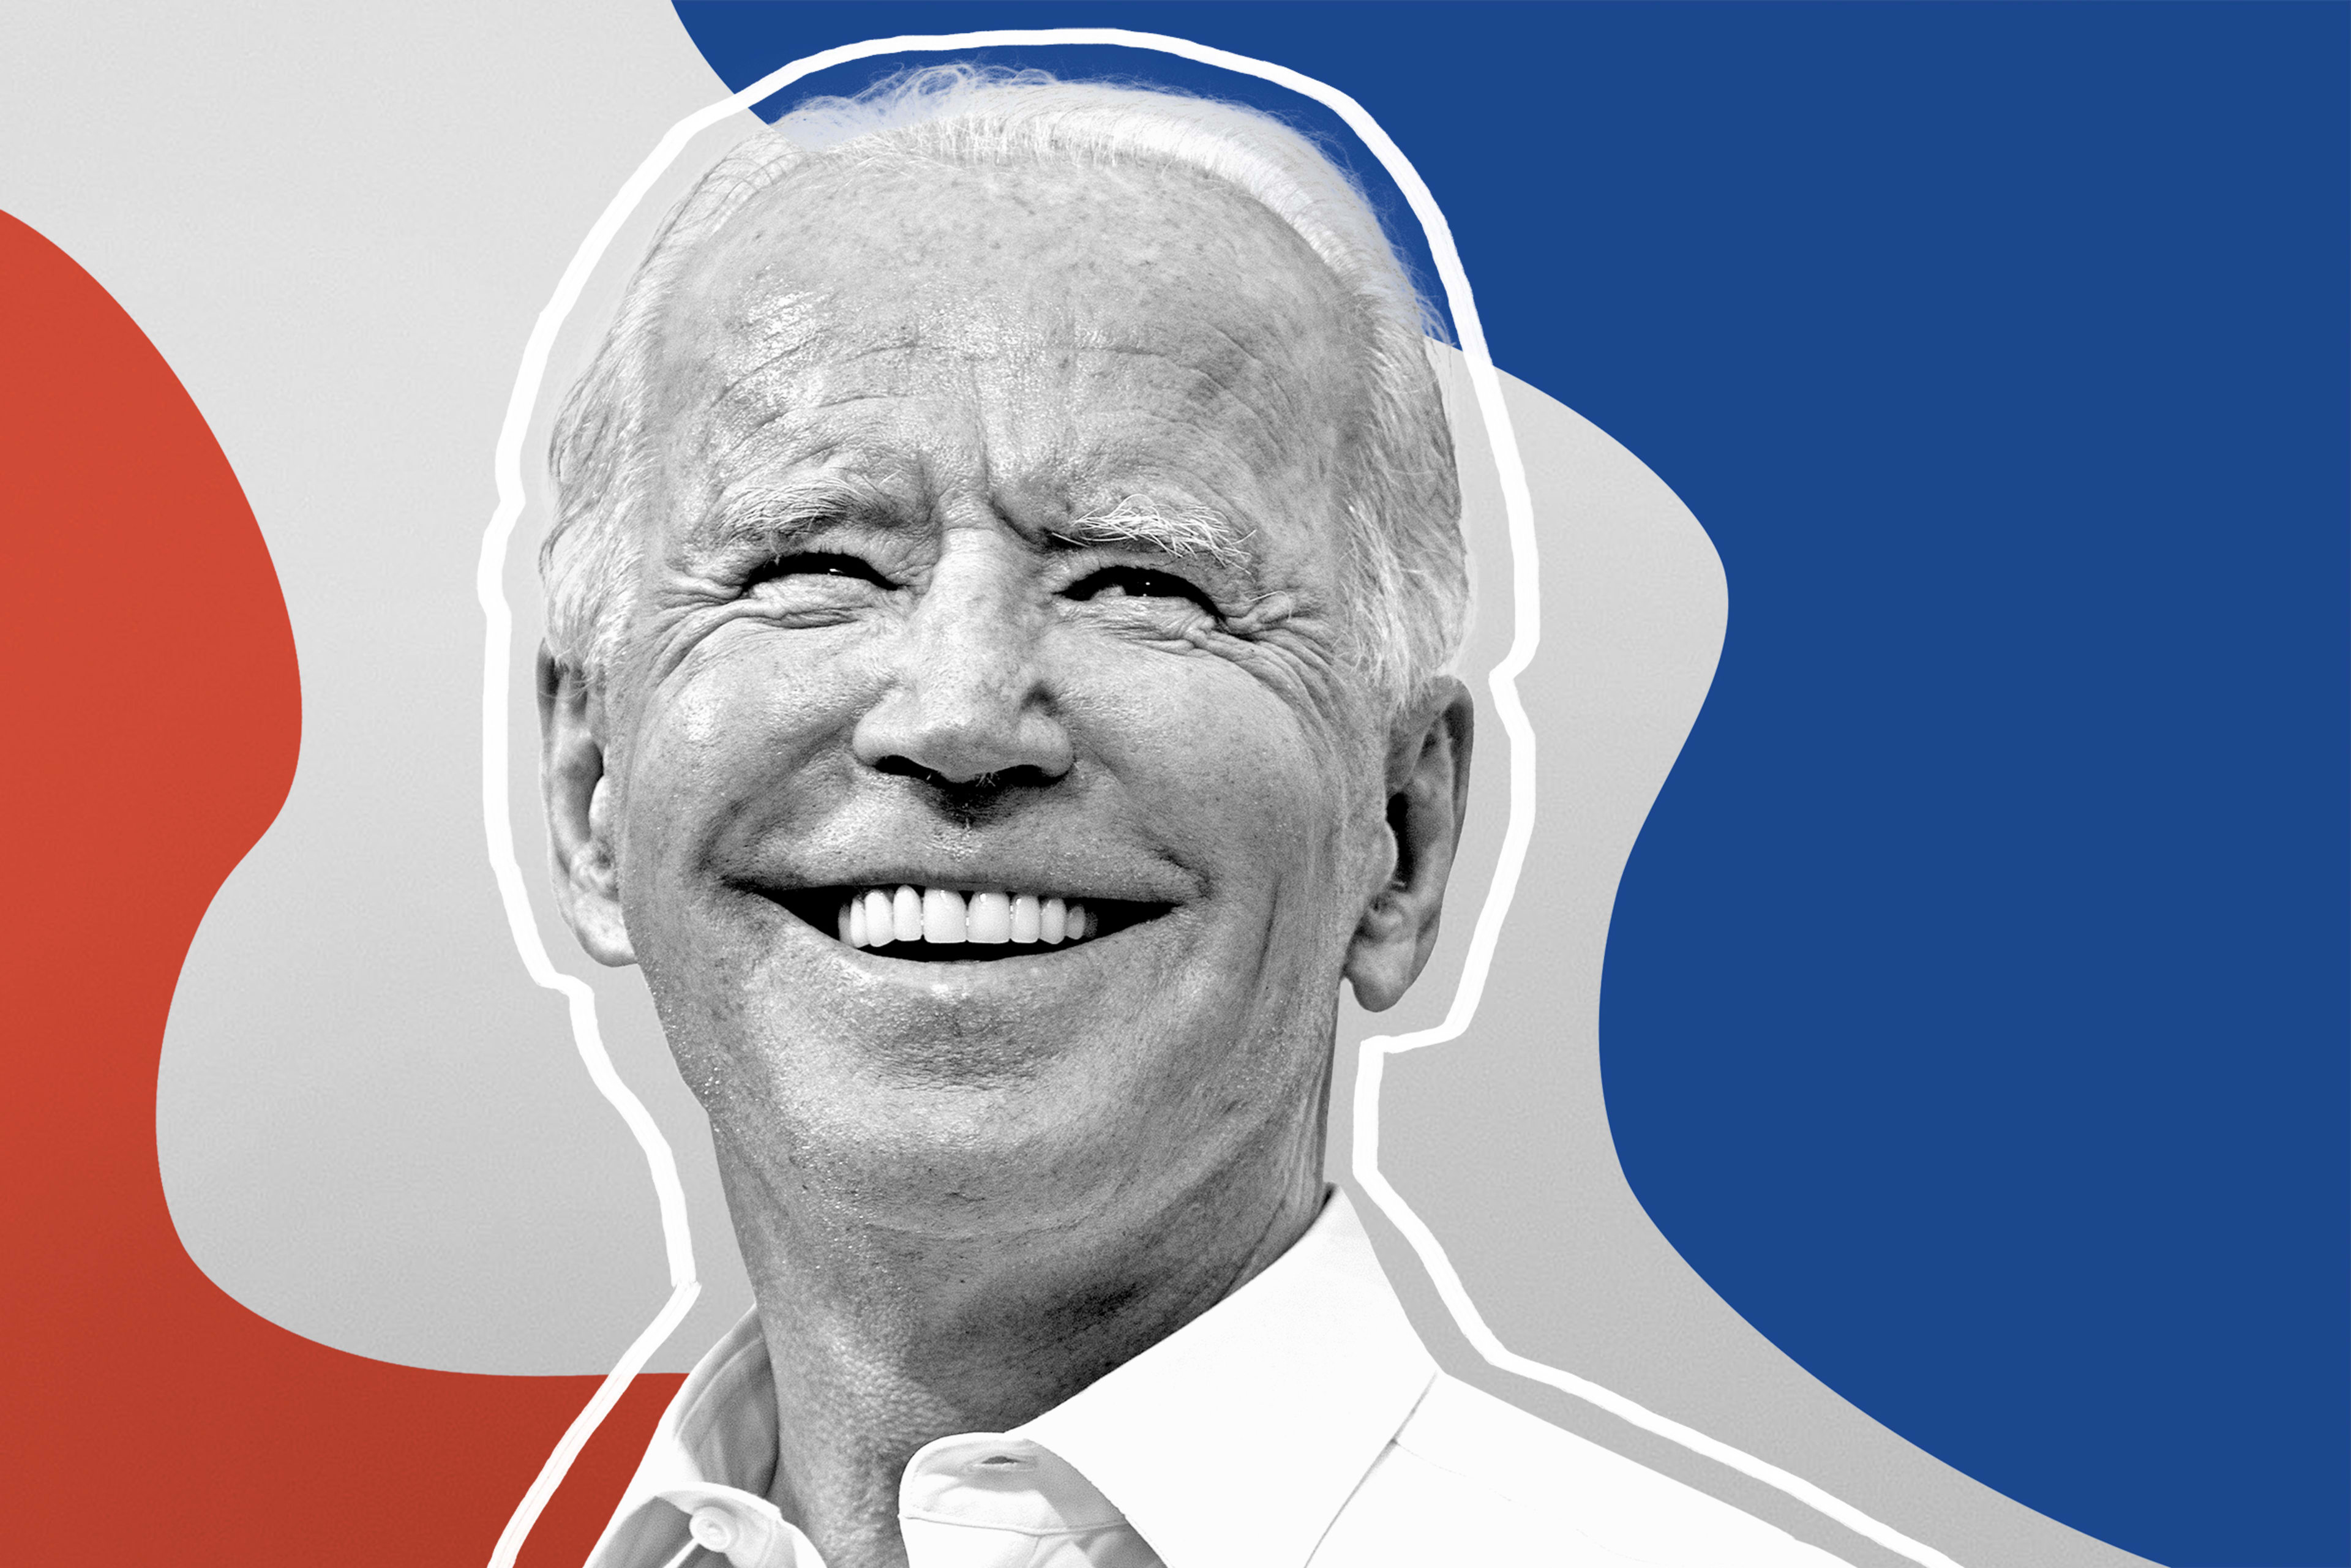 Joe Biden wins the presidential race, defeating Donald Trump